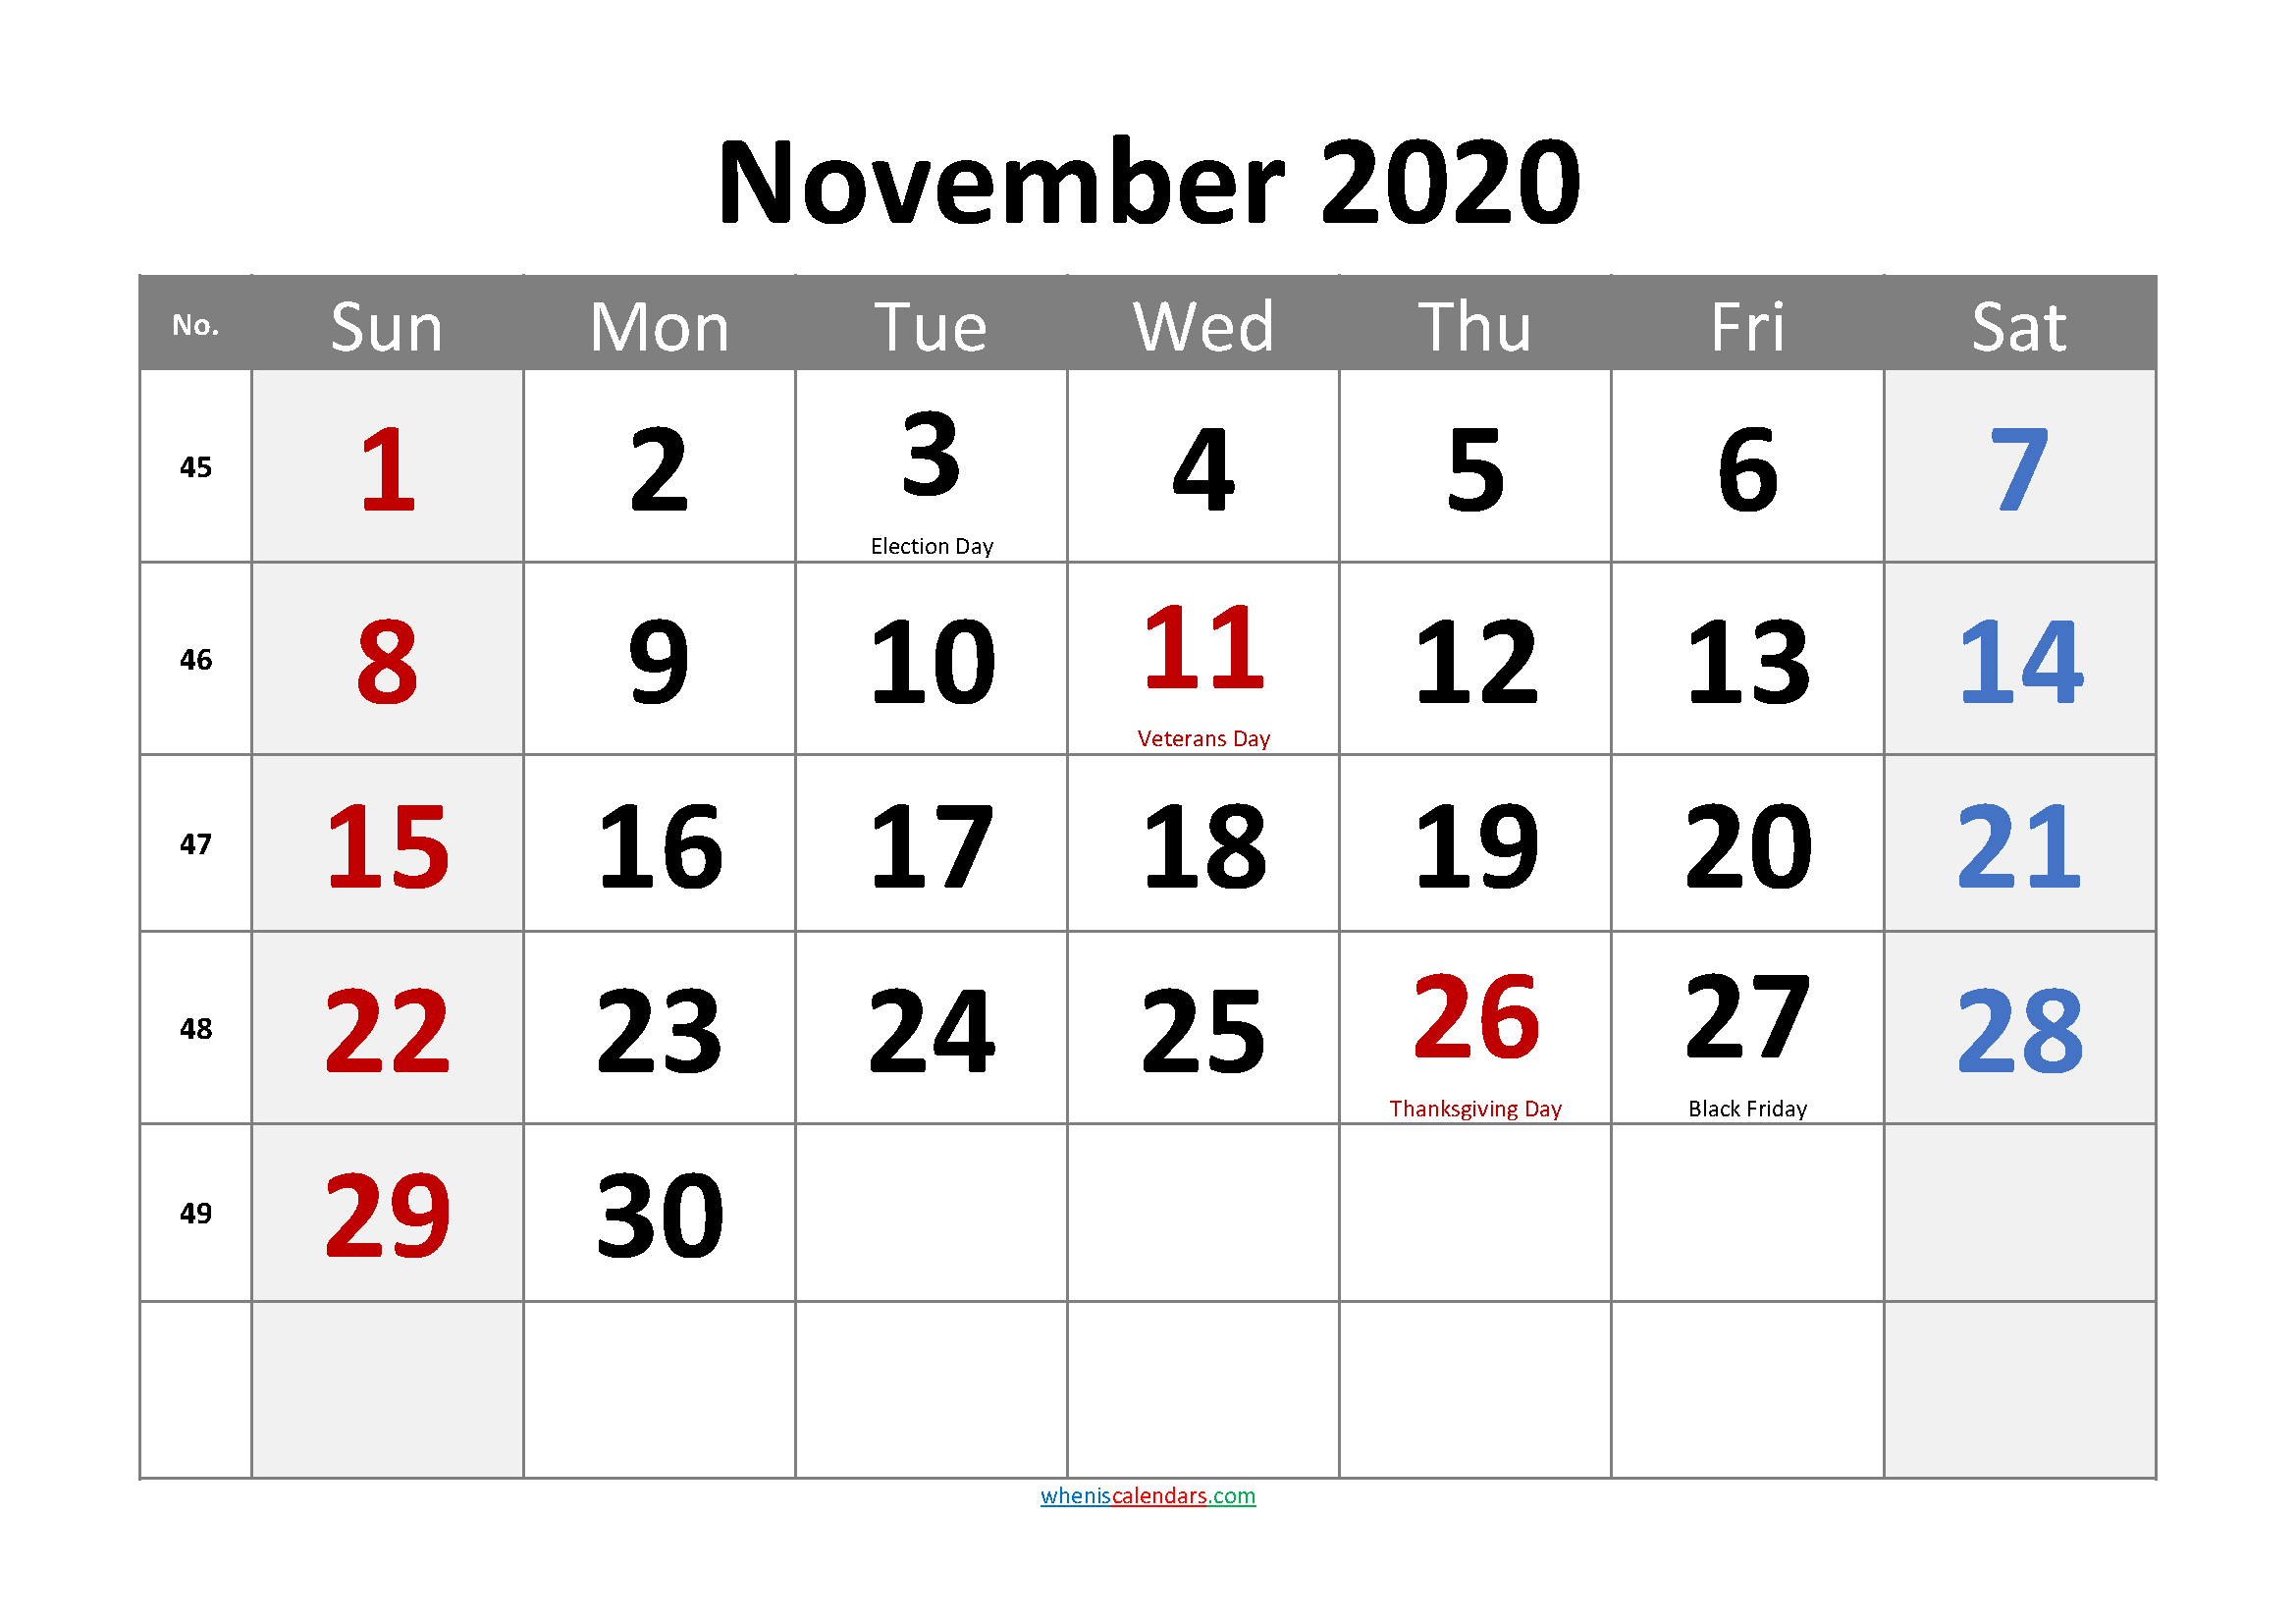 NOVEMBER 2020 Printable Calendar with Holidays